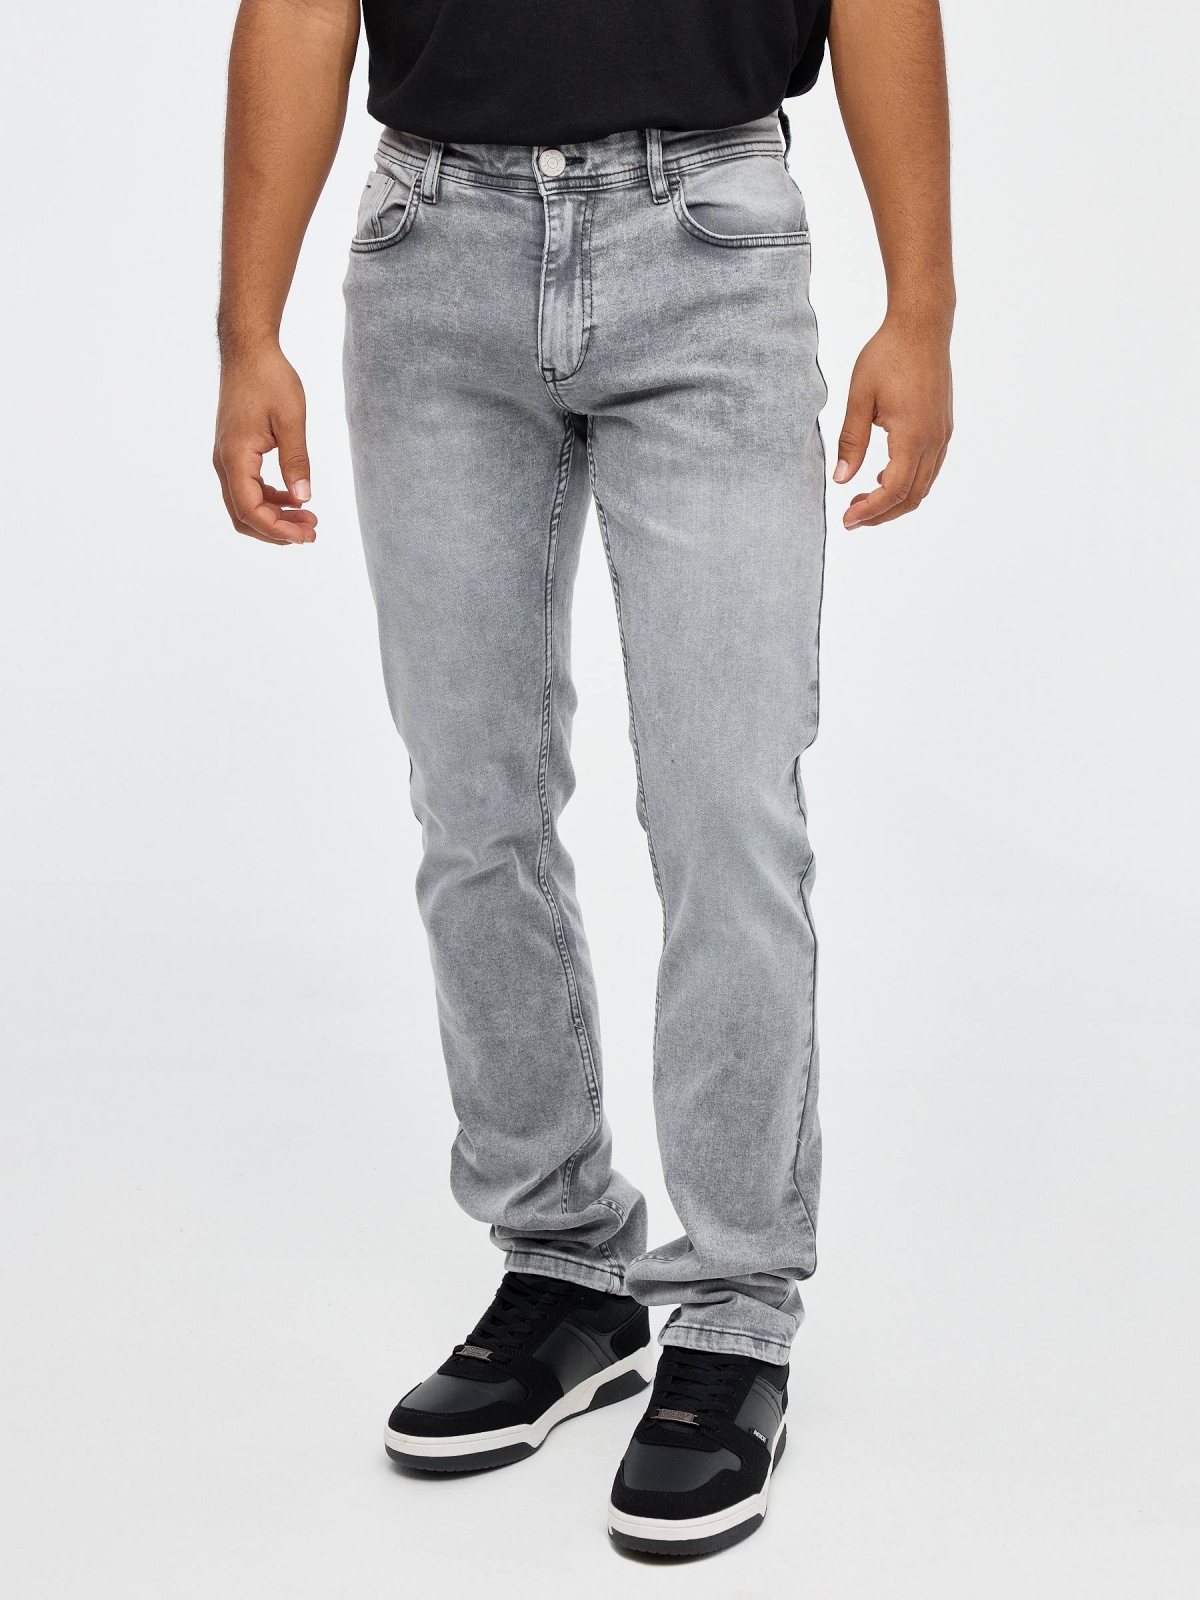 Grey regular denim jeans grey middle front view